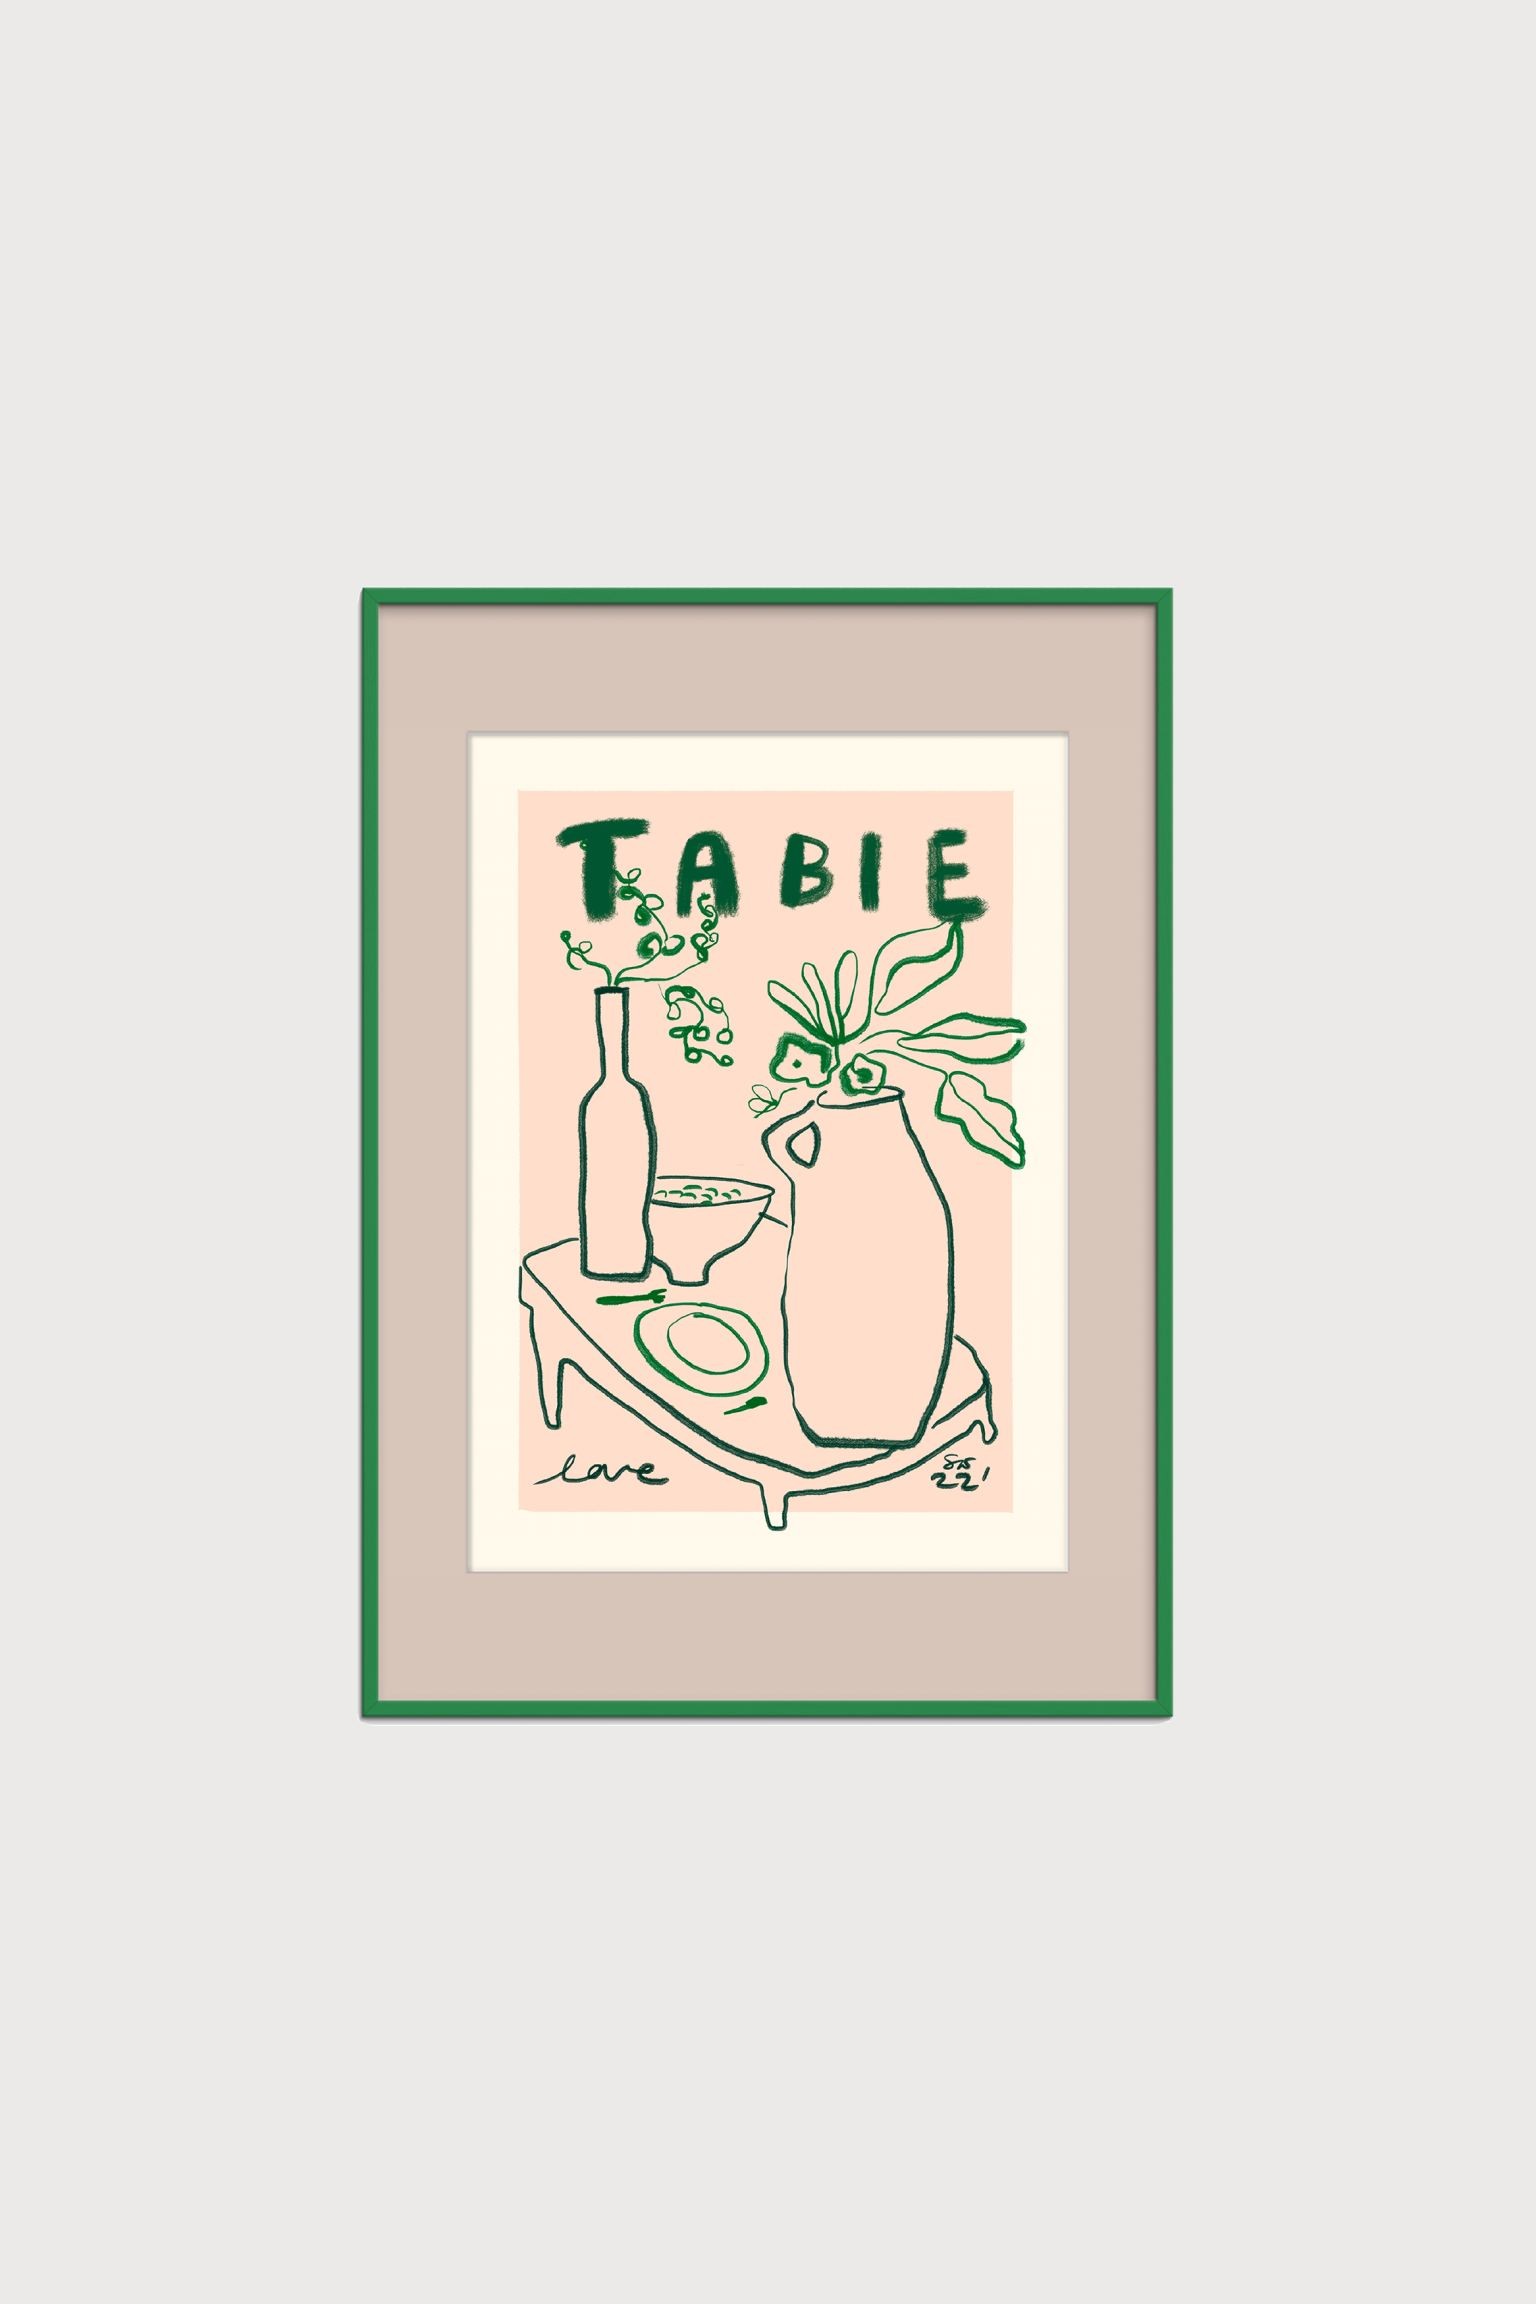 Poster & Frame Das Rotes Rabbit - Table Love (в рамці) - Green/стіл 1204702001 | 1204702001